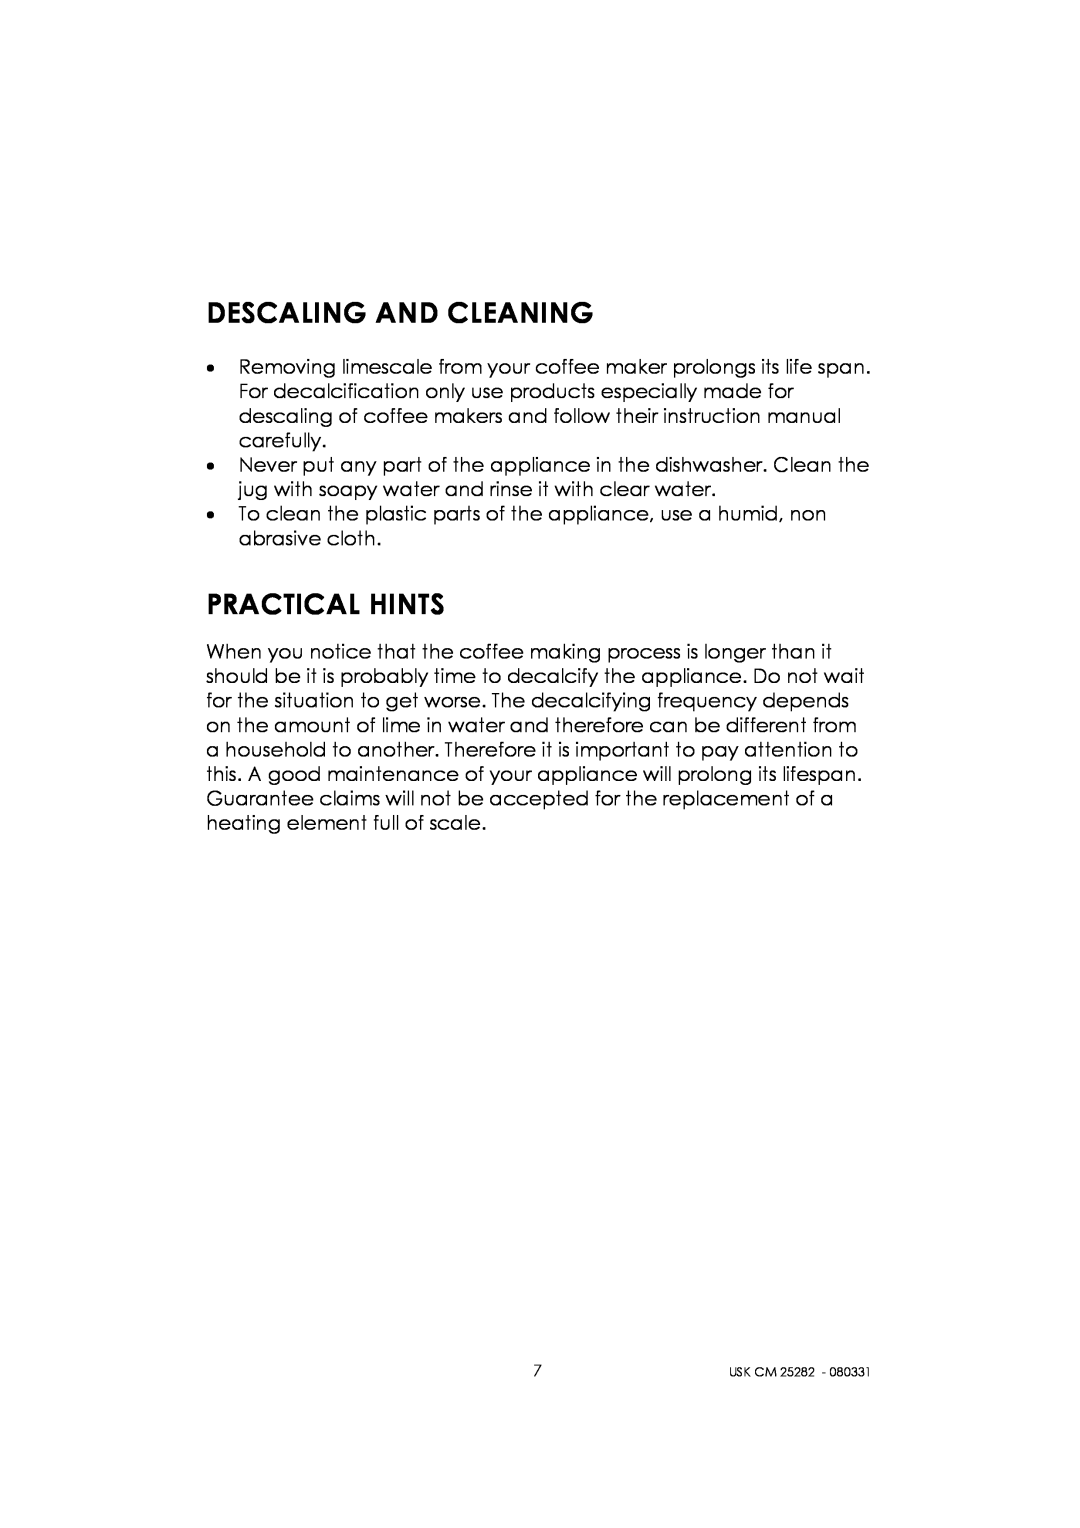 Kalorik USK CM 25282 manual Descaling And Cleaning, Practical Hints 